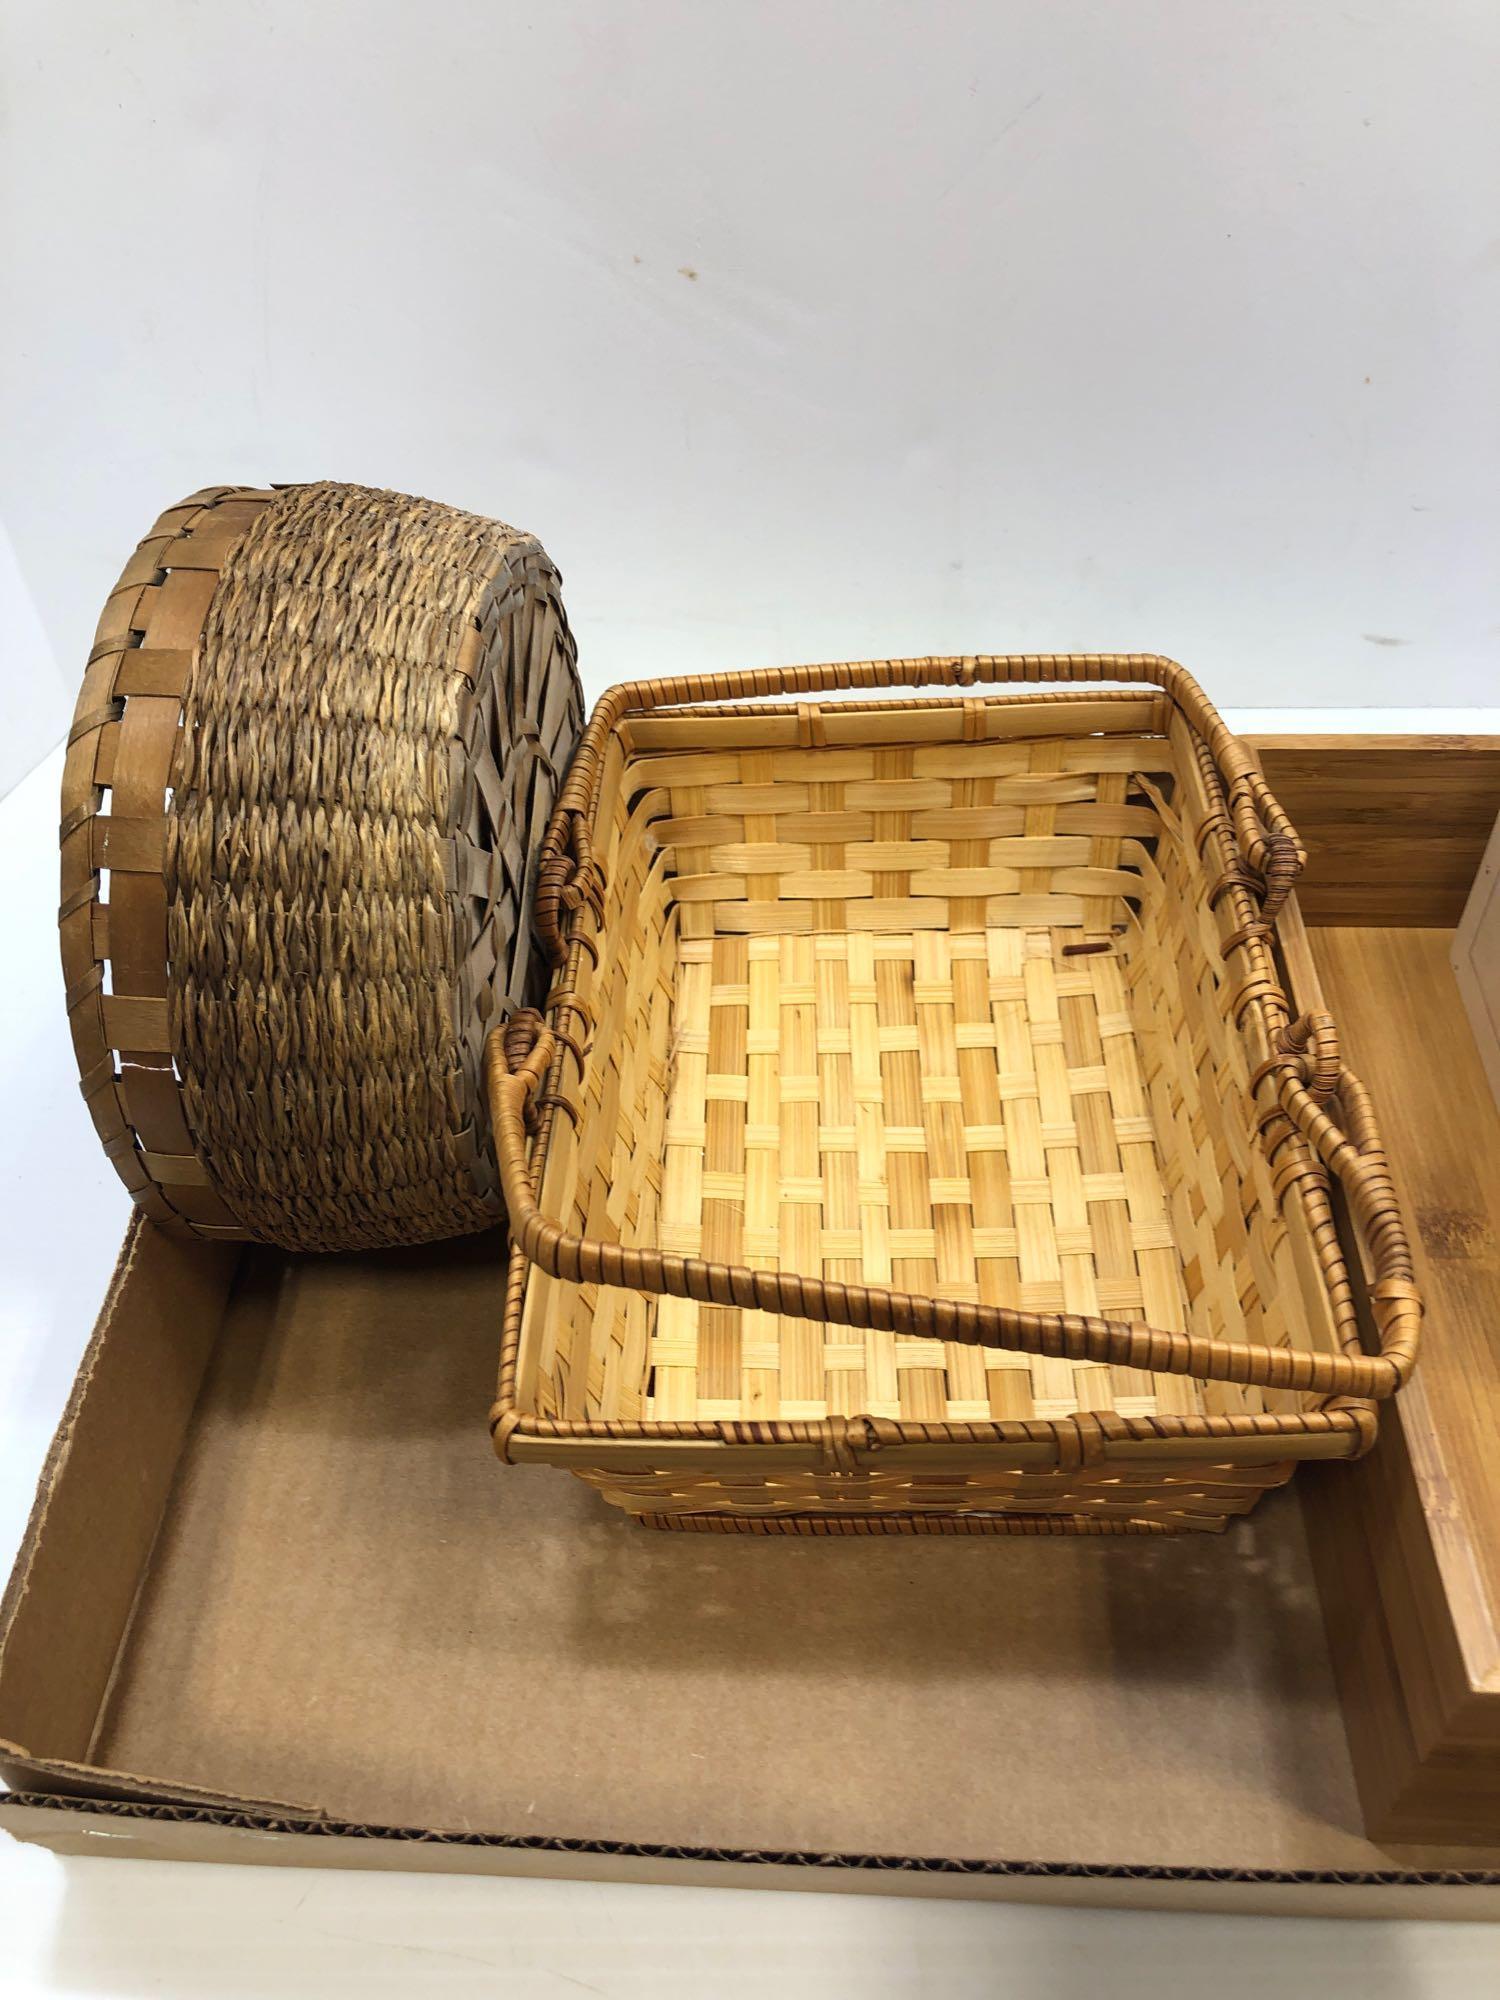 Baskets, Recipe box, recipes, boxes